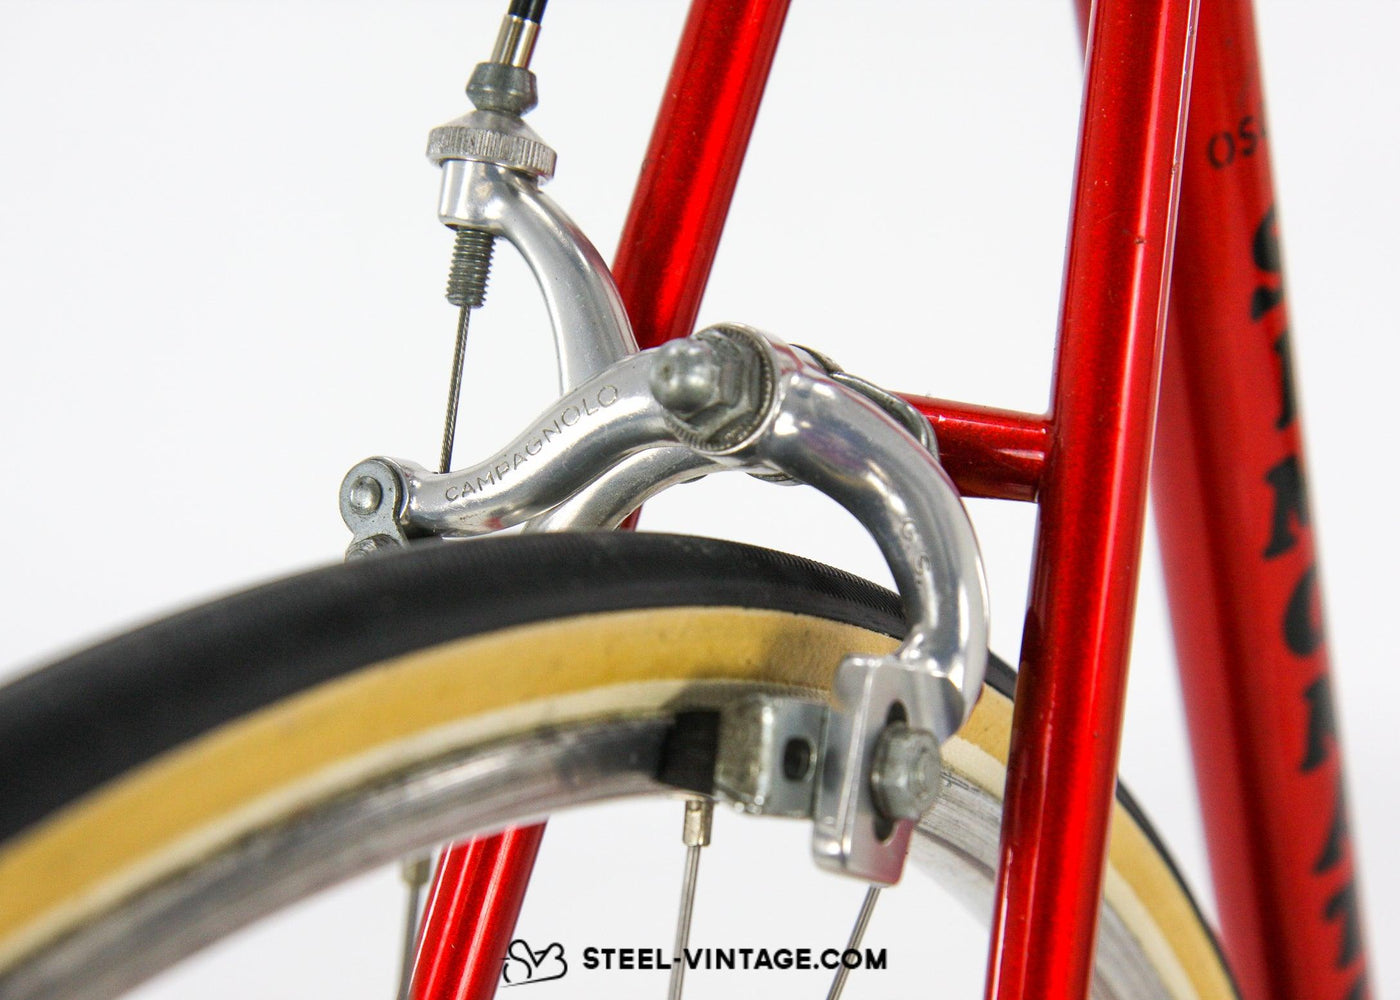 Simonato Special Classic Eroica Bicycle - Steel Vintage Bikes